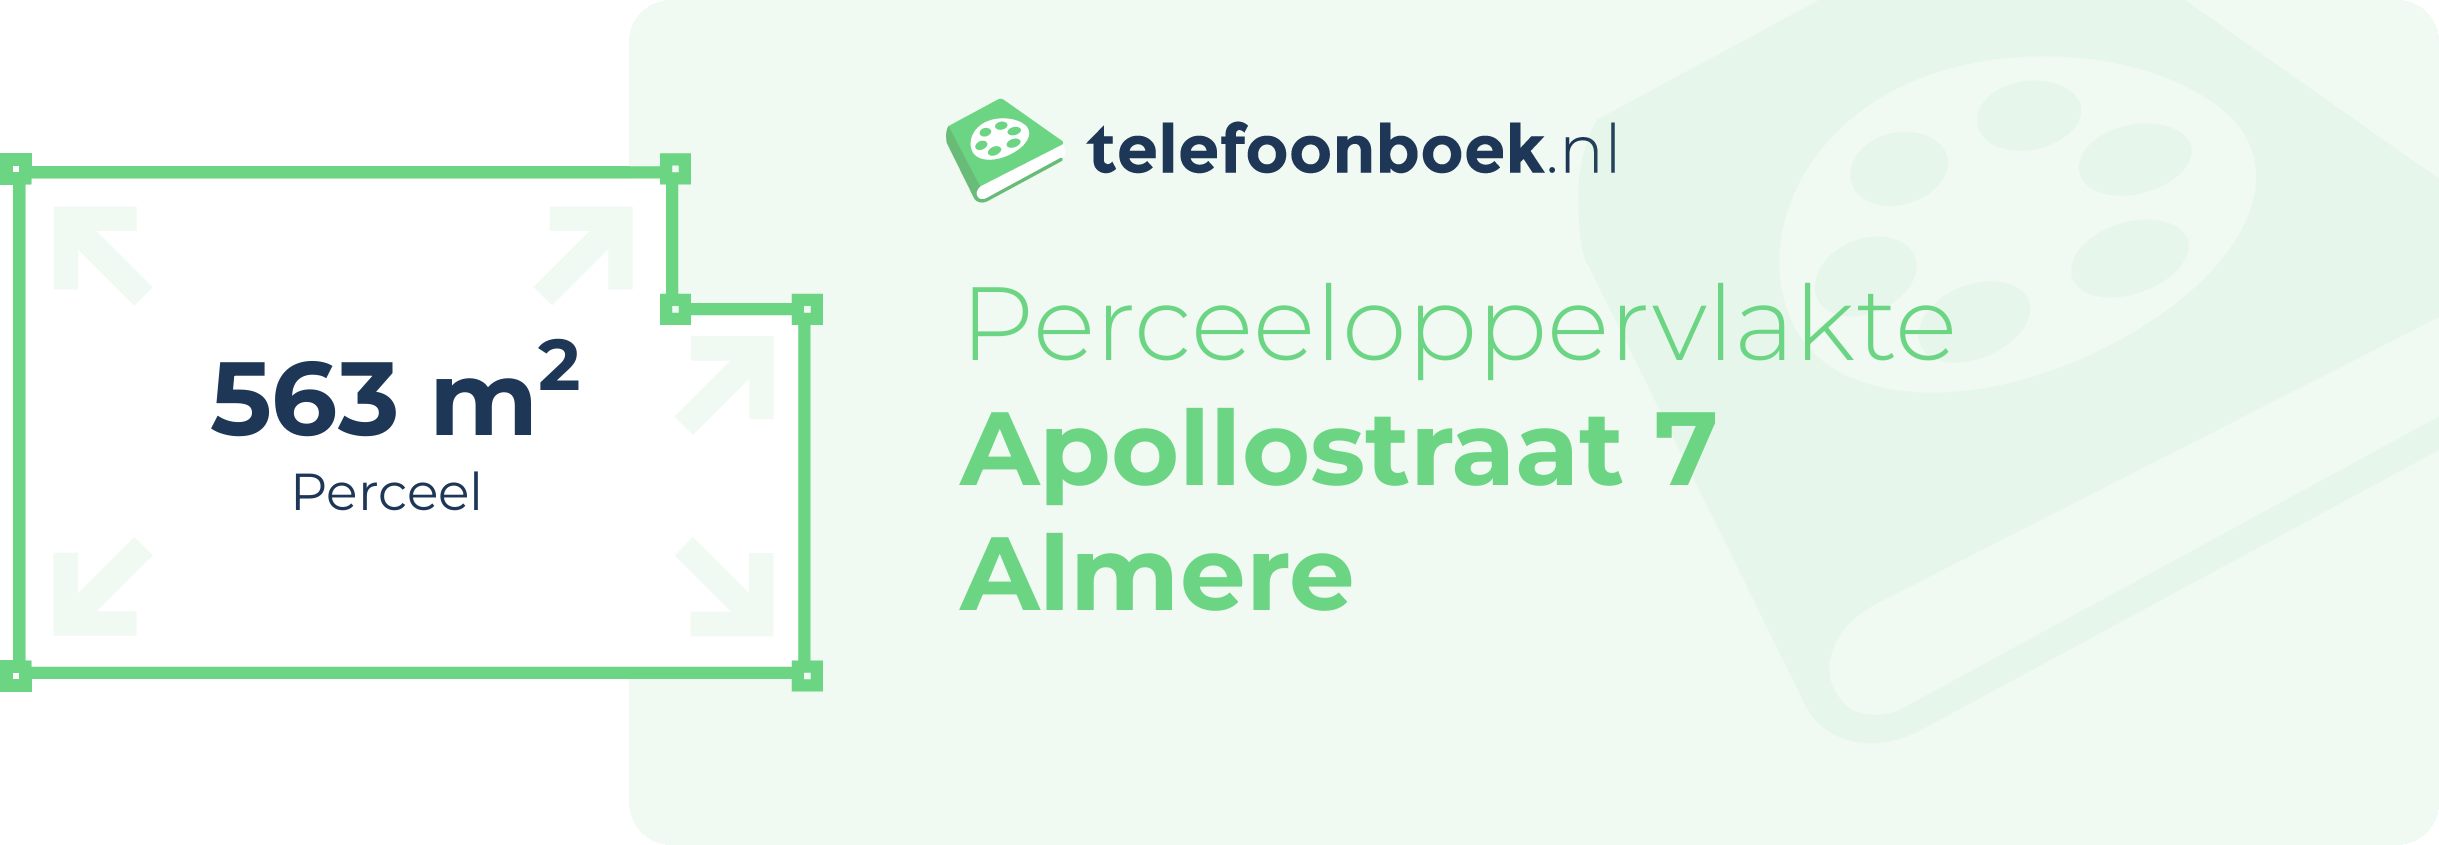 Perceeloppervlakte Apollostraat 7 Almere